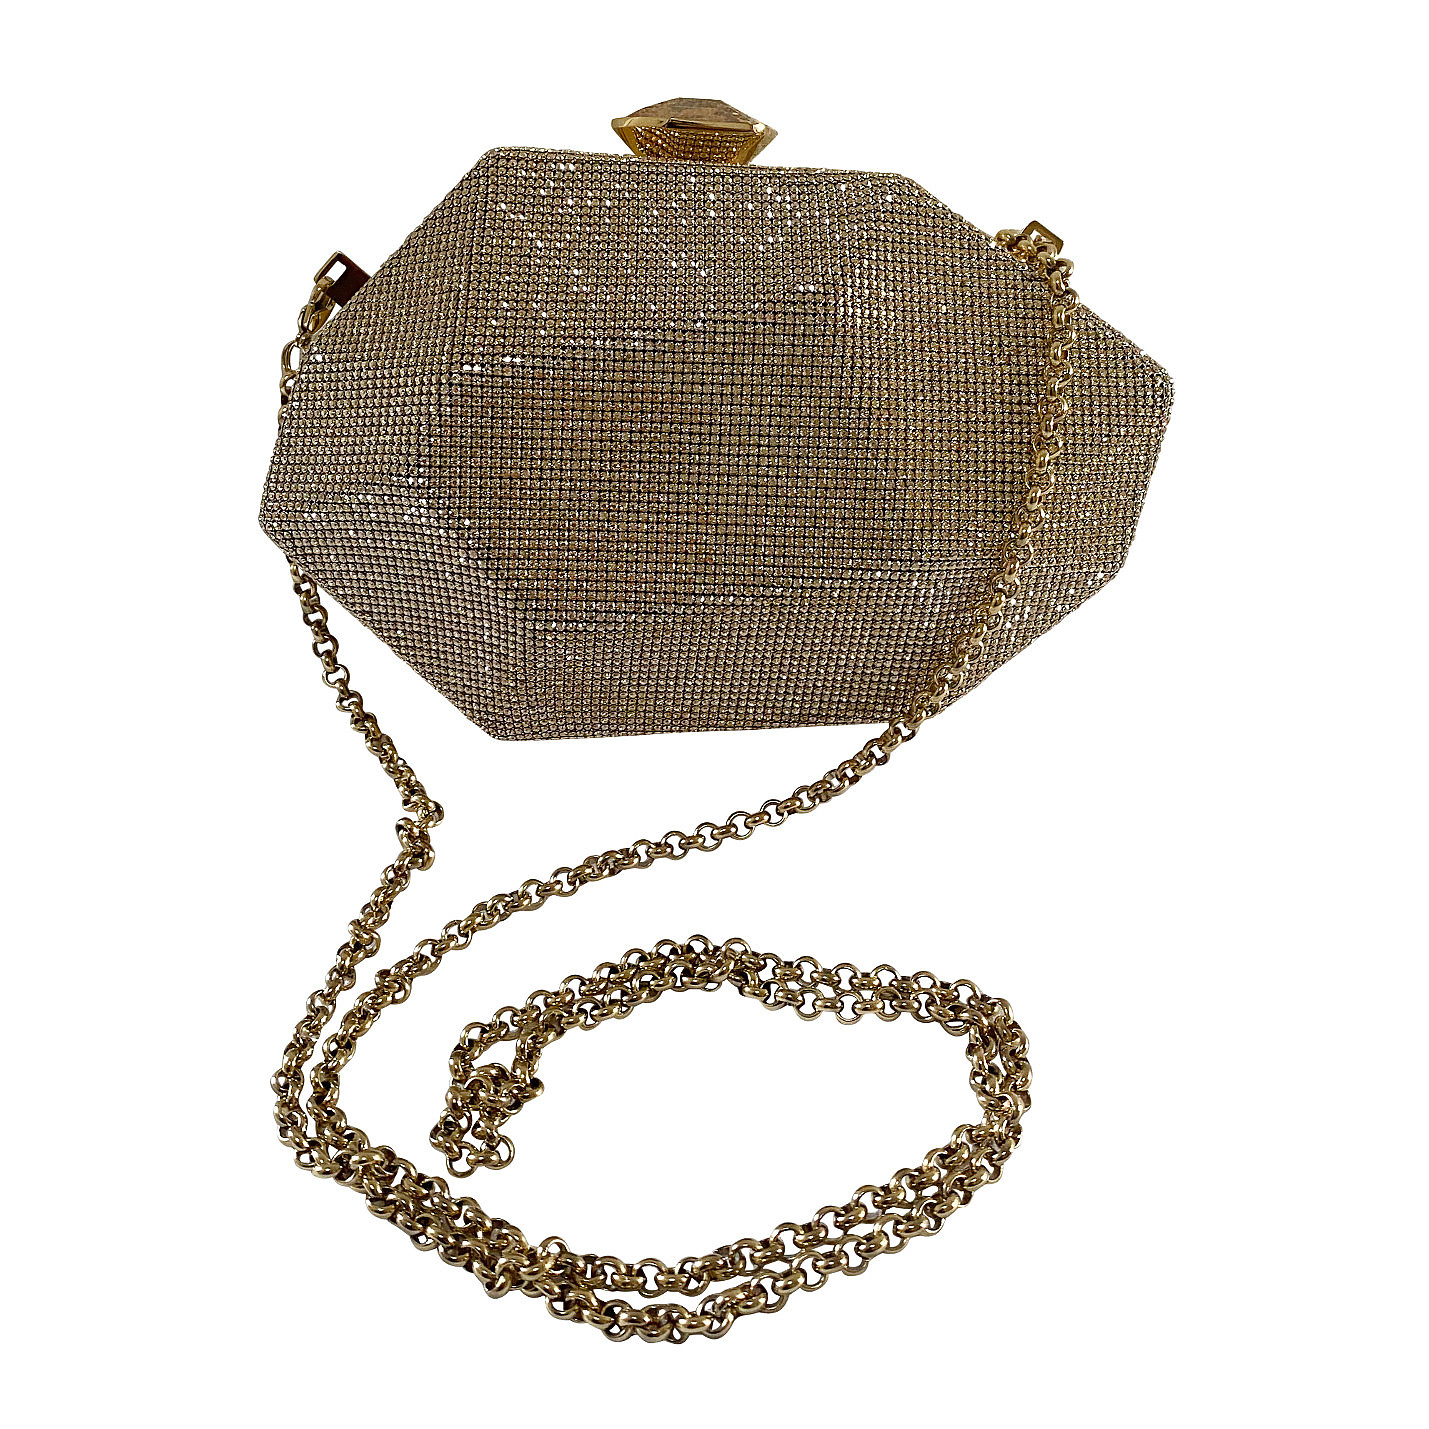 Atelier Swarovski Crystal geometric clutch with satin contrast and chain gold